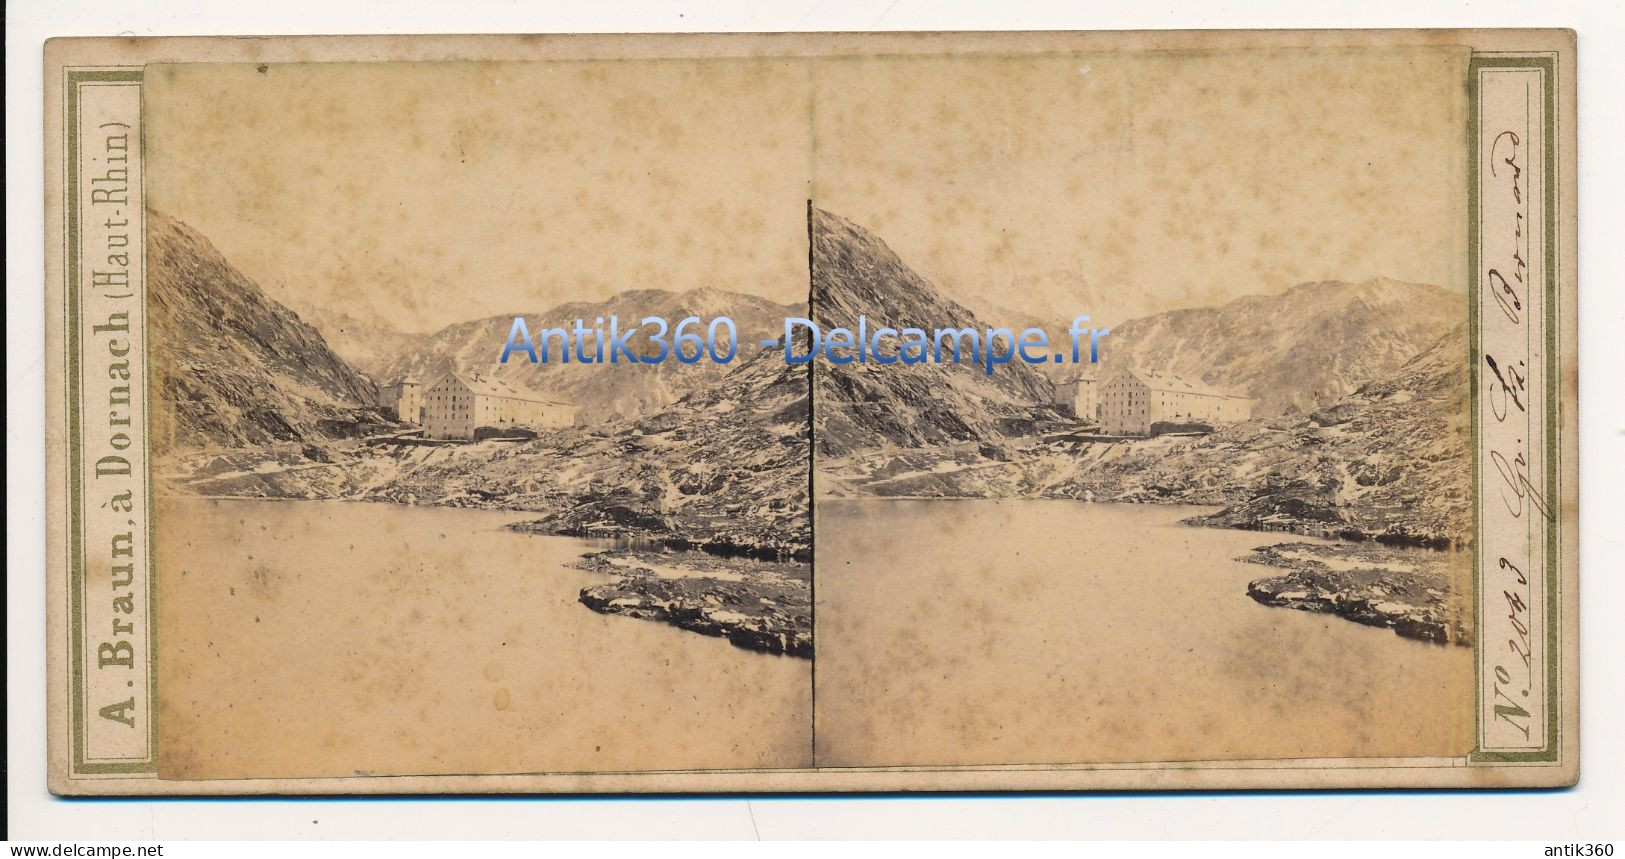 Photographie Ancienne Vue Stéréoscopique Circa 1860 Suisse Isère Vue Du Grand Saint Bernard Photographe Adolphe BRAUN - Stereoscoop